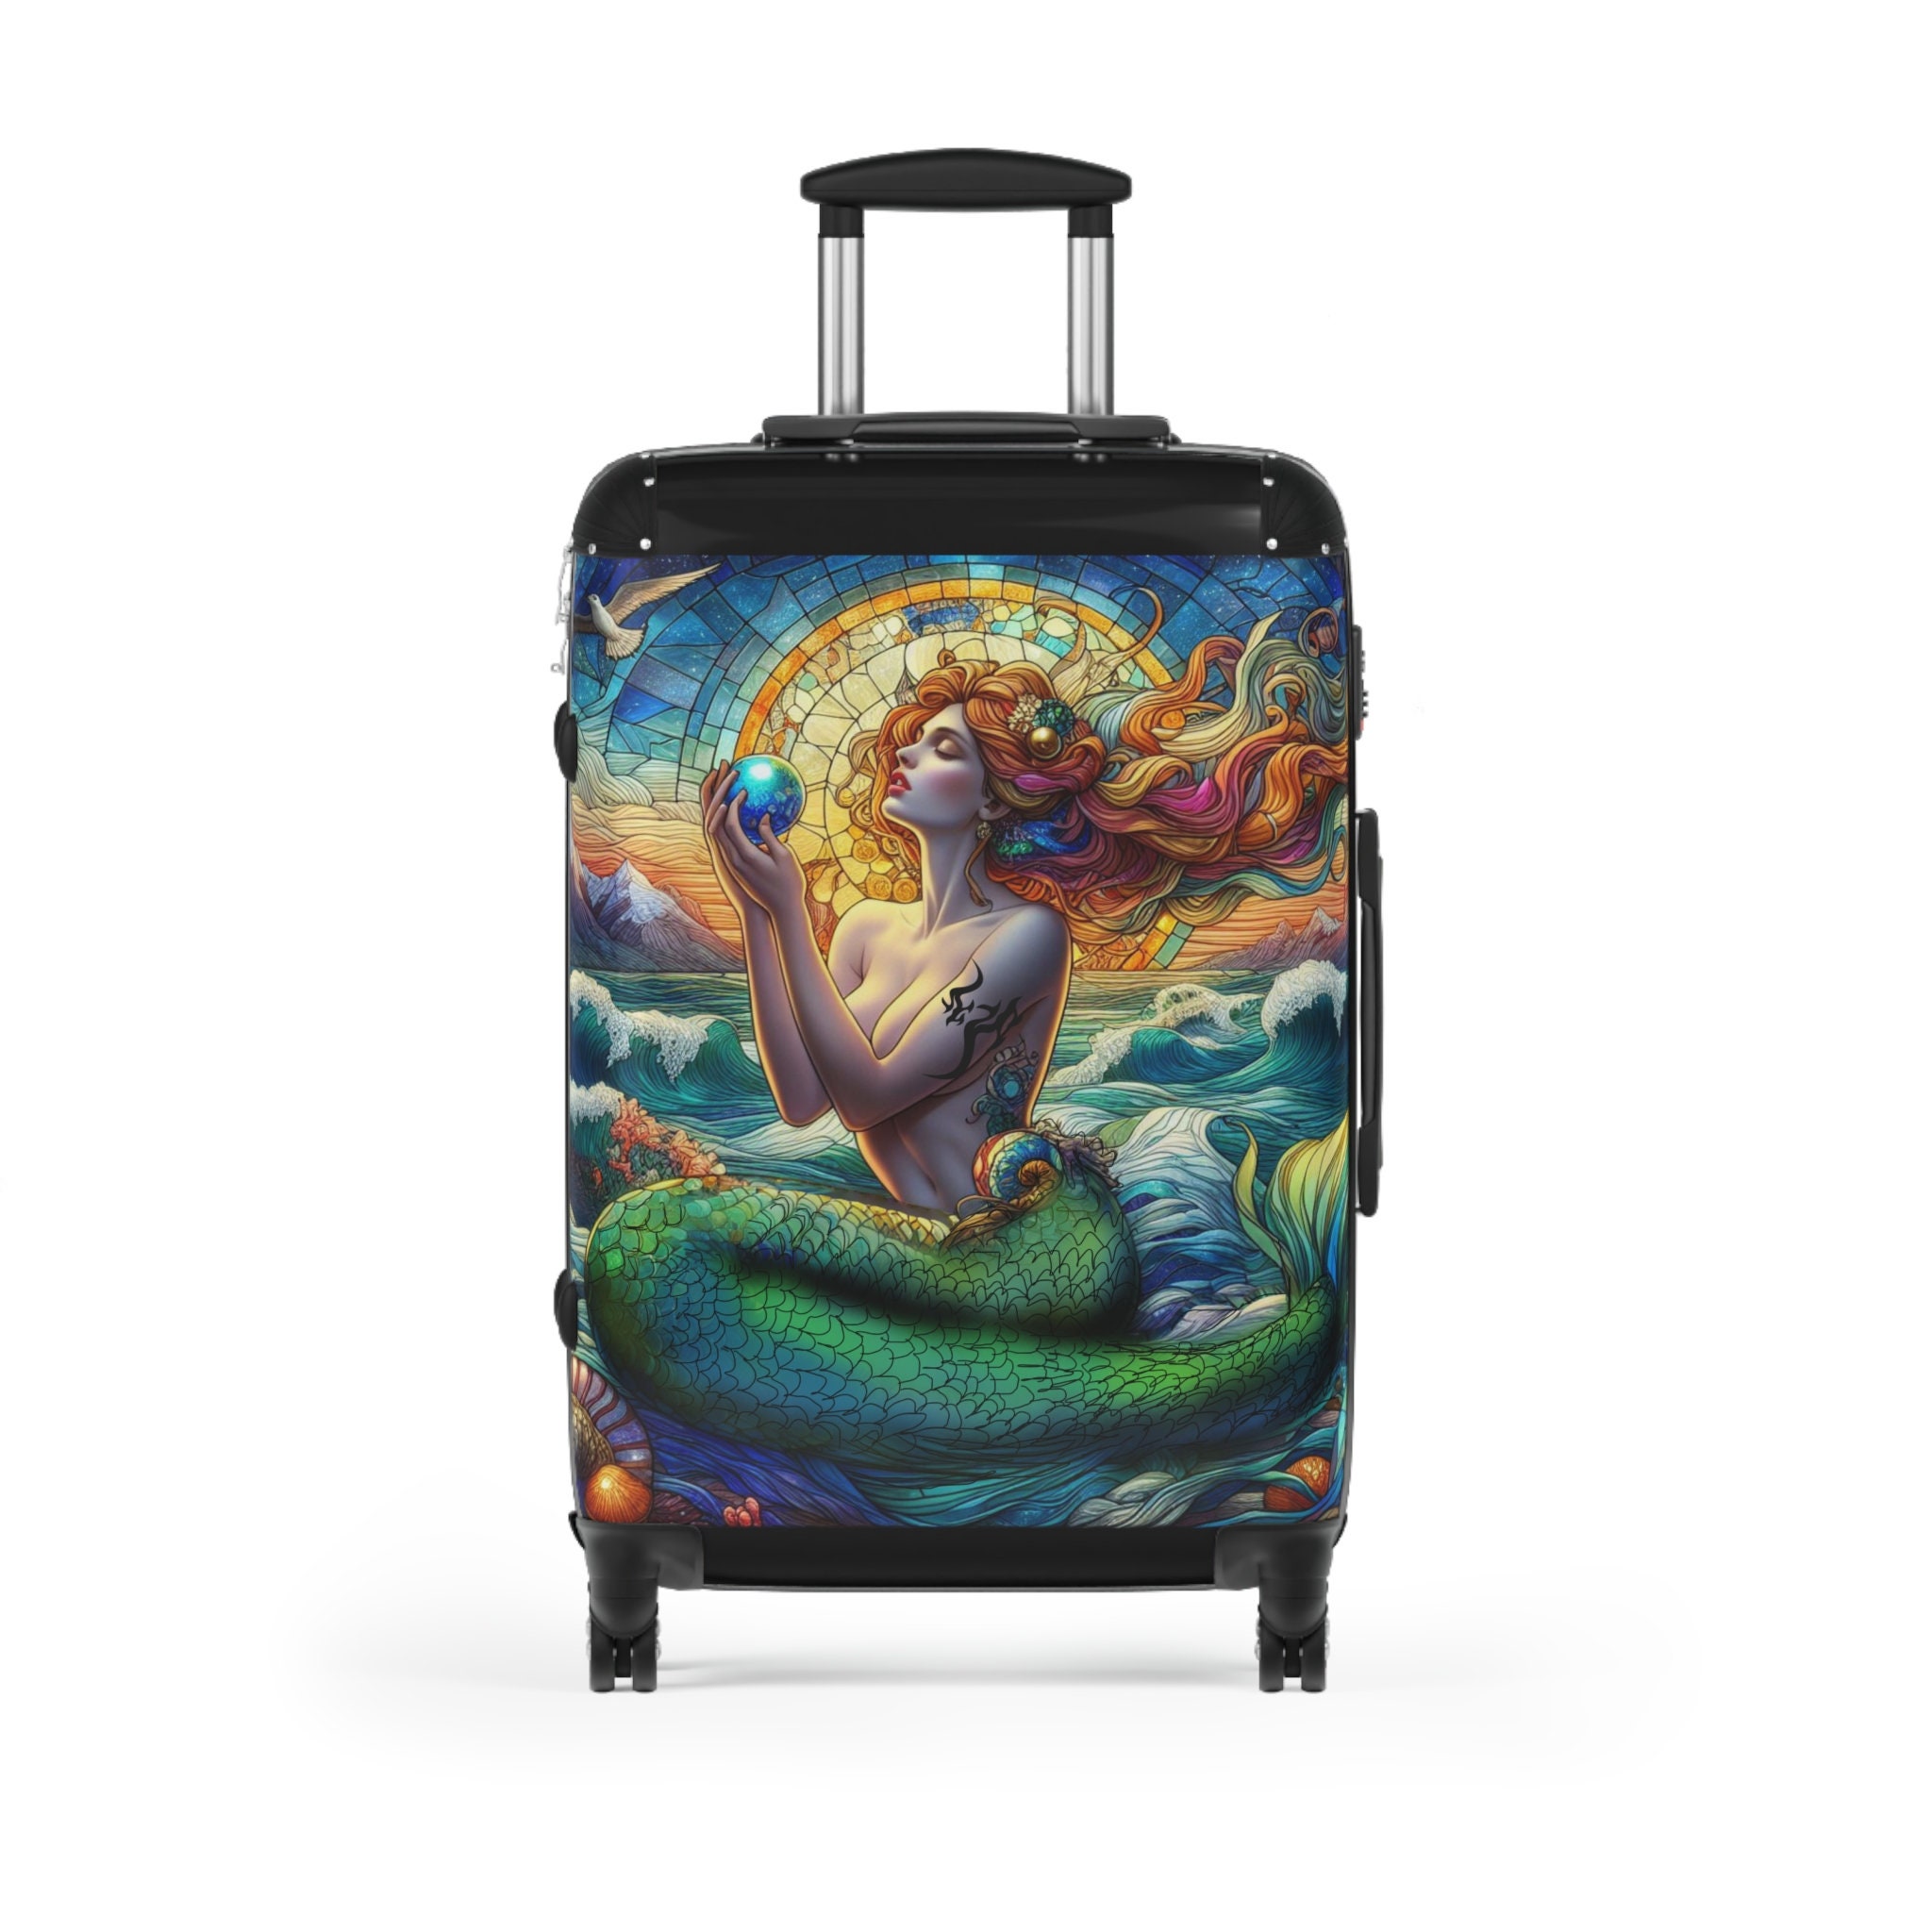 The Mermaid Suitcase, Vacation mermaid suitcase